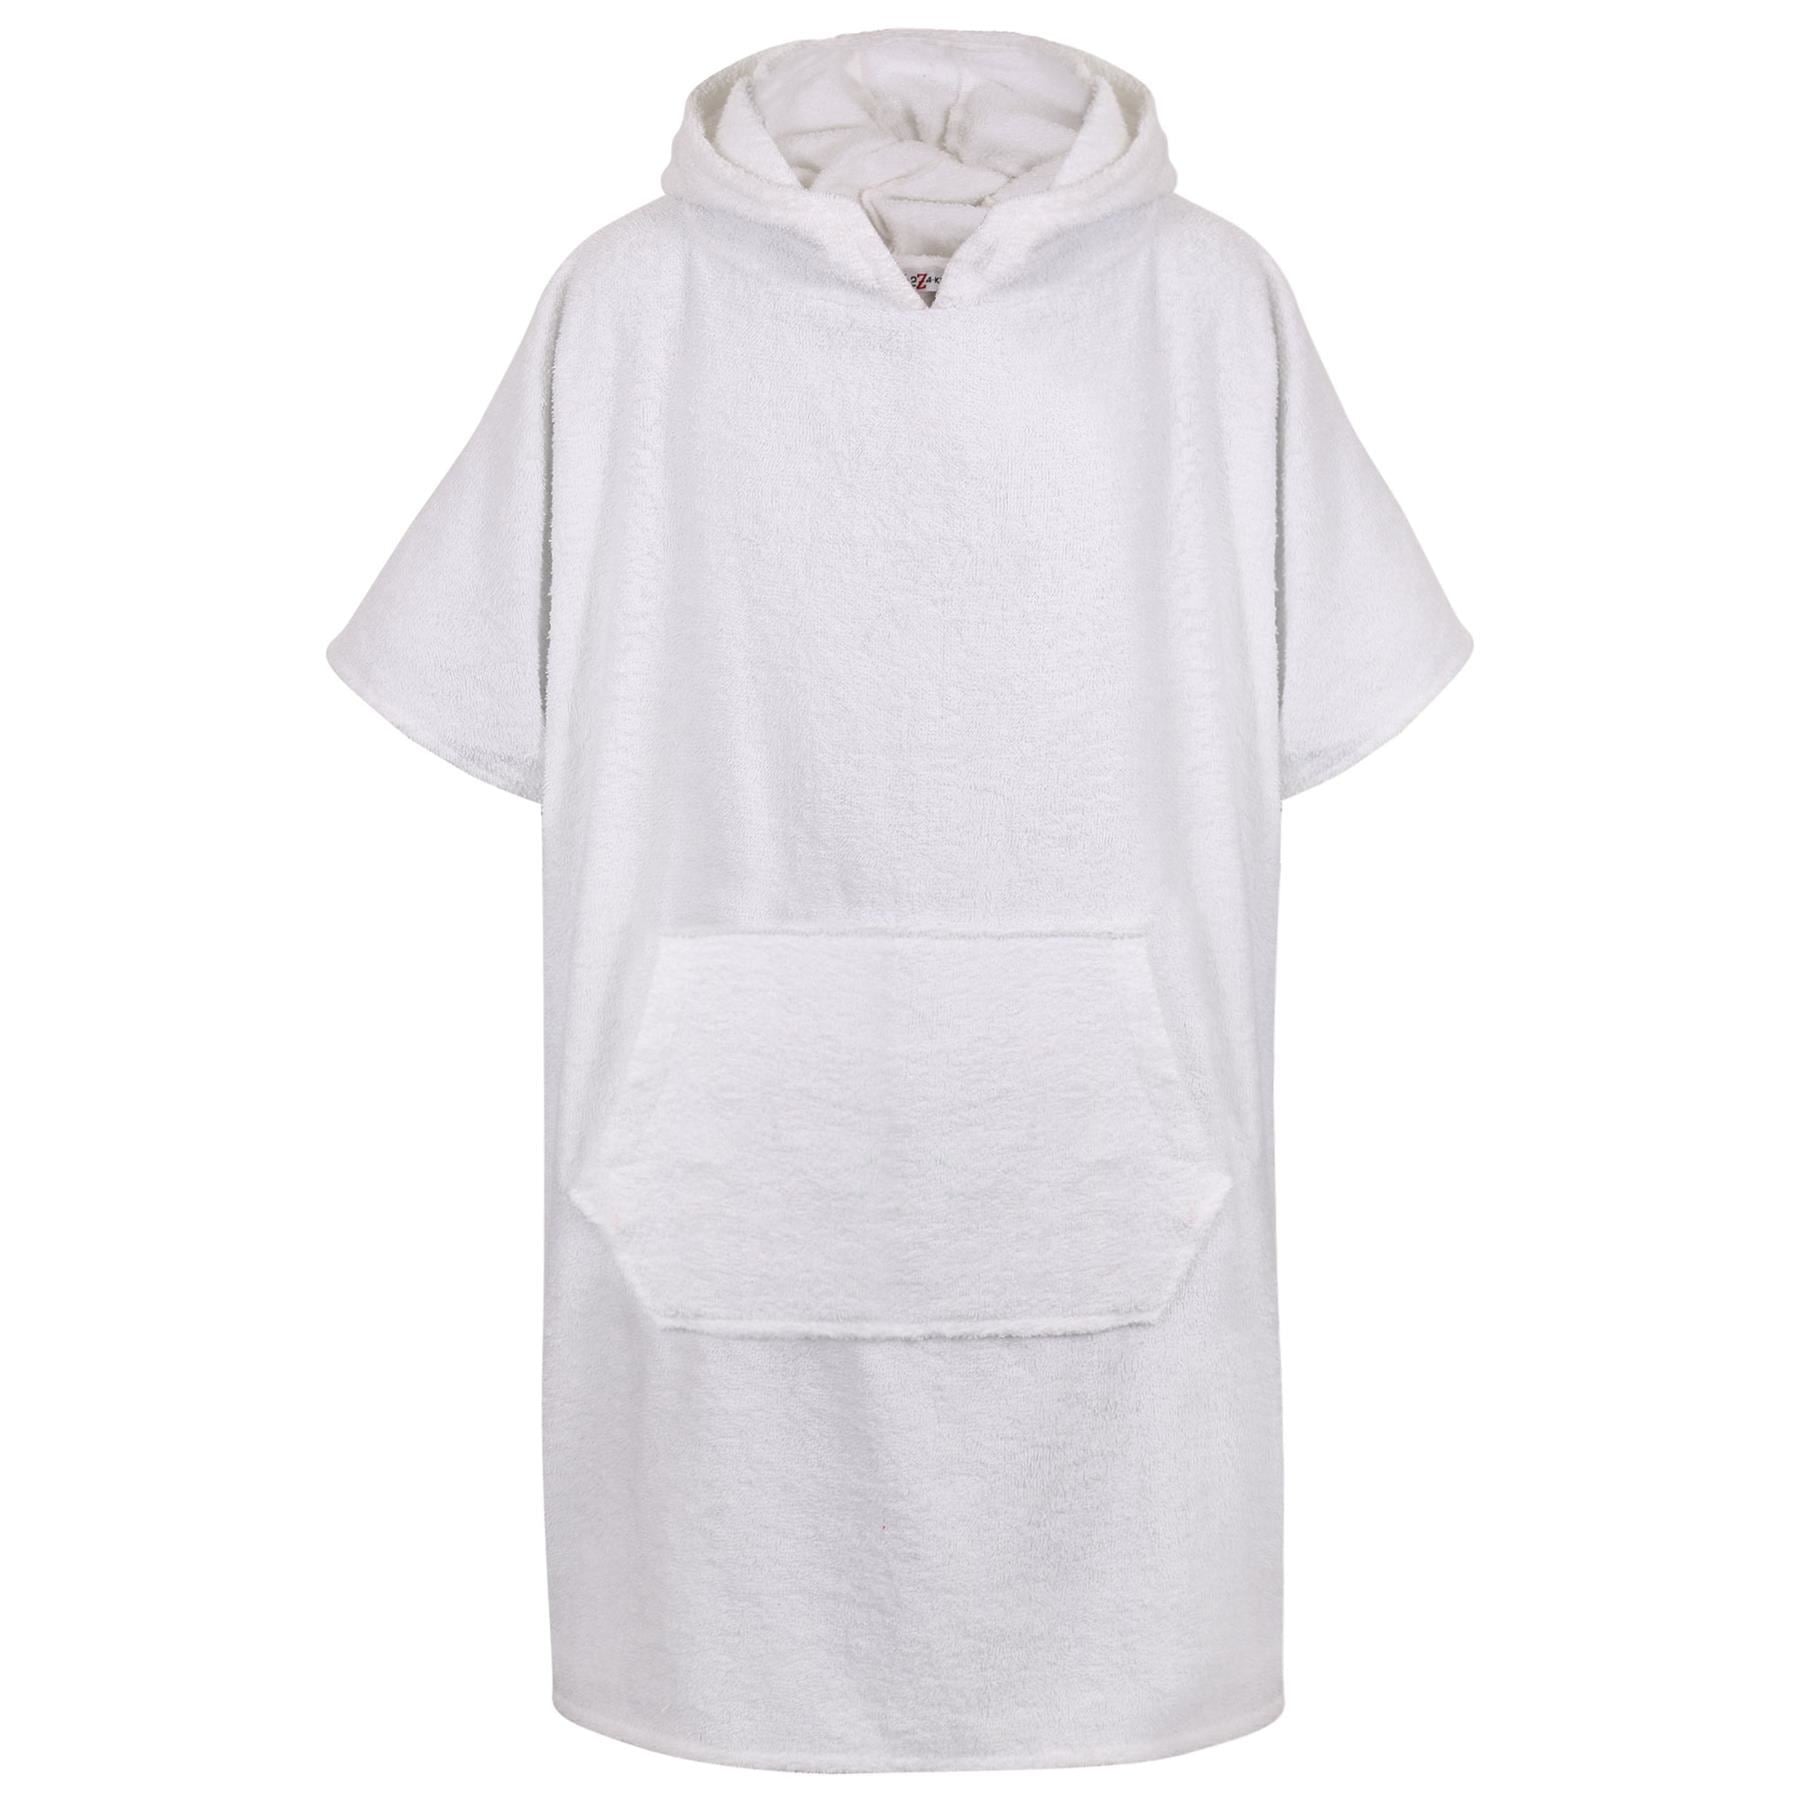 Kids Bathrobe 100% Cotton White Hooded Bathing Dressing Gown Unisex 2-13 Y